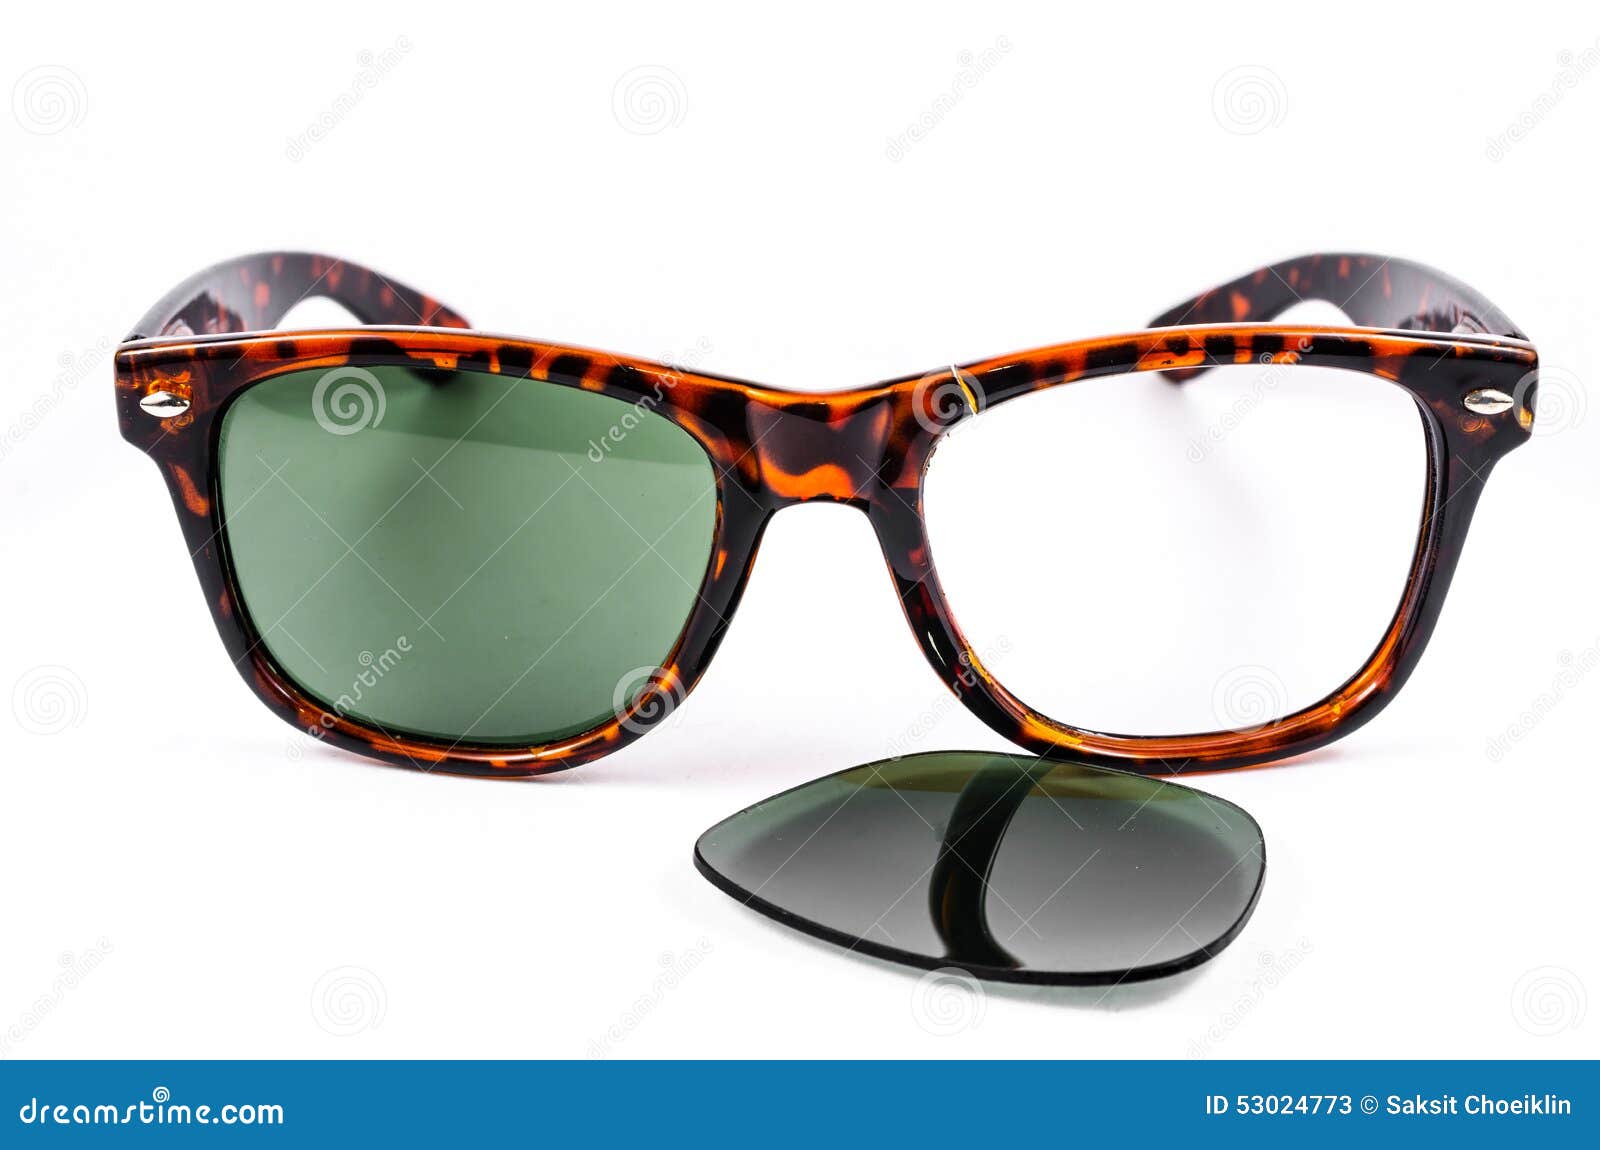 Broken sunglasses stock image. Image of broken, eyewear - 53024773